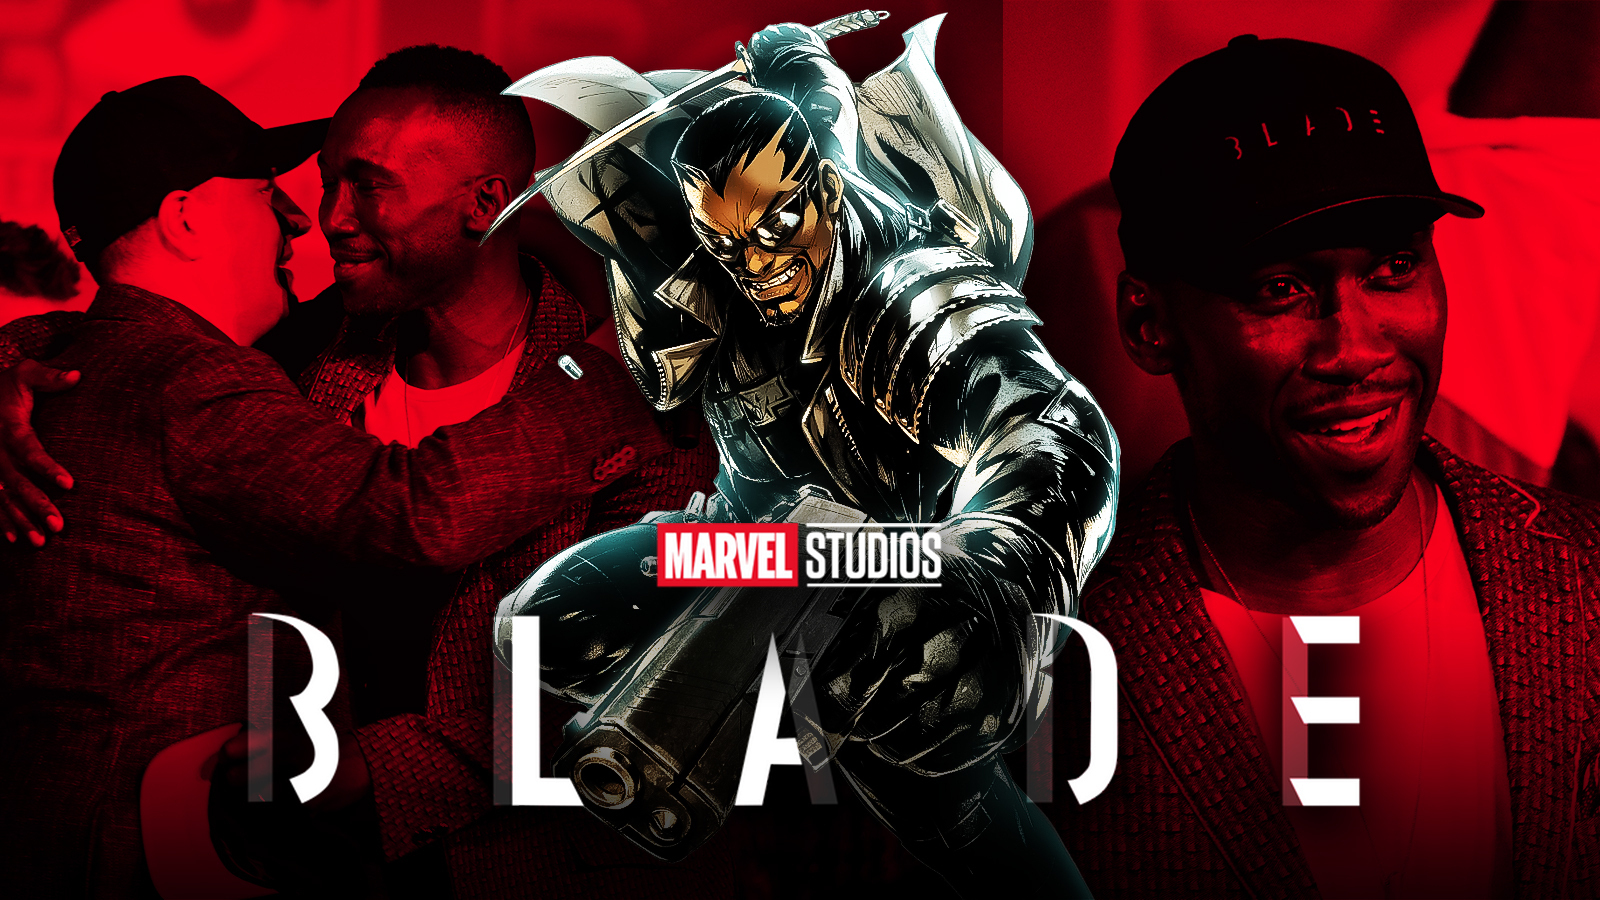 Mcu The Direct On X Official Marvelstudios Blade Has Been